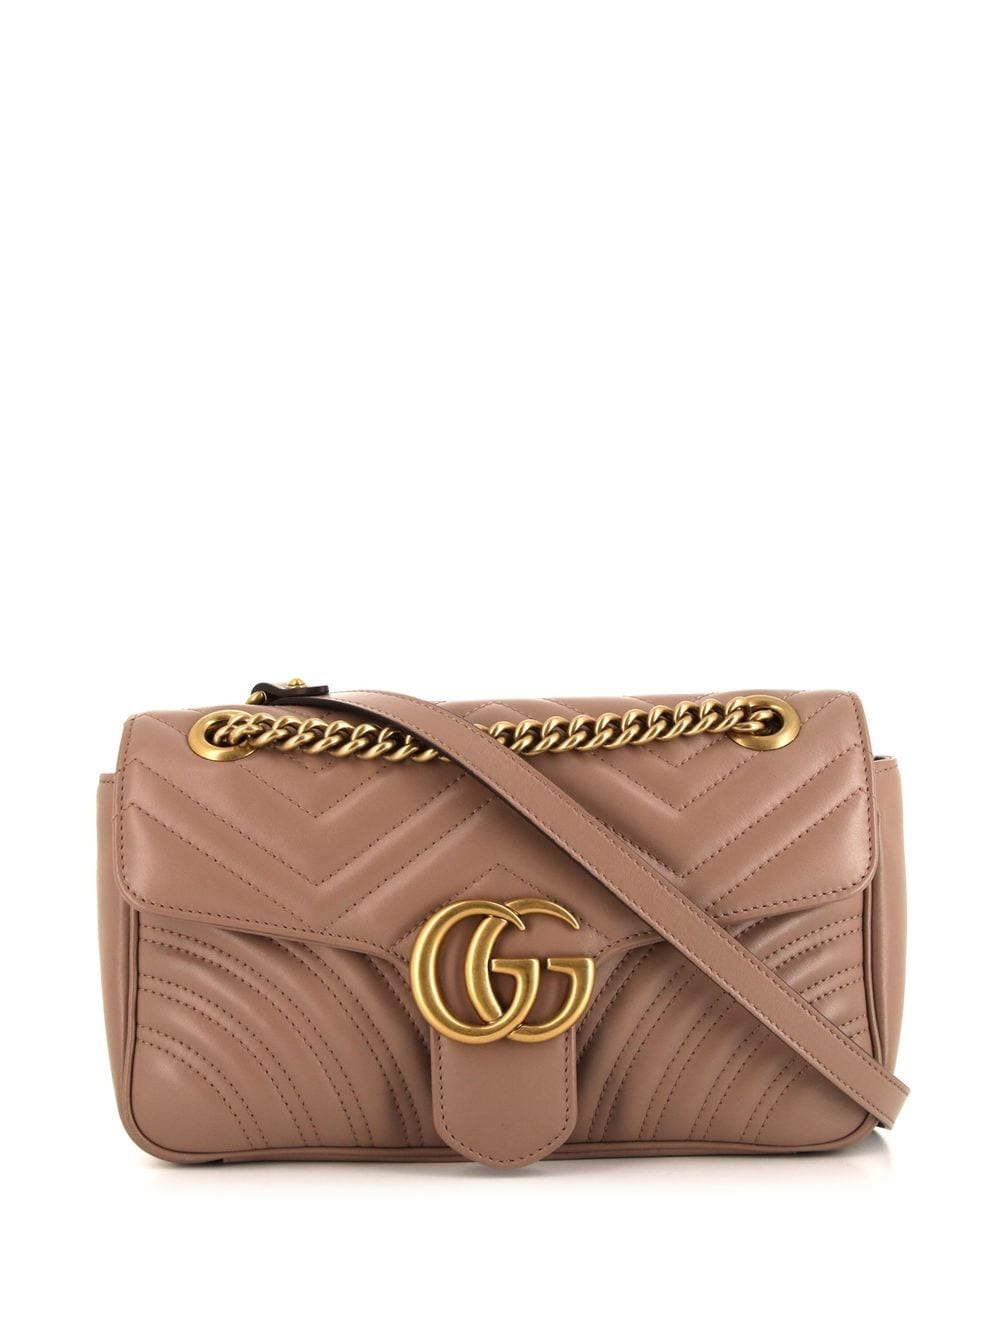 Gucci Womens Shoulder Bags, Beige